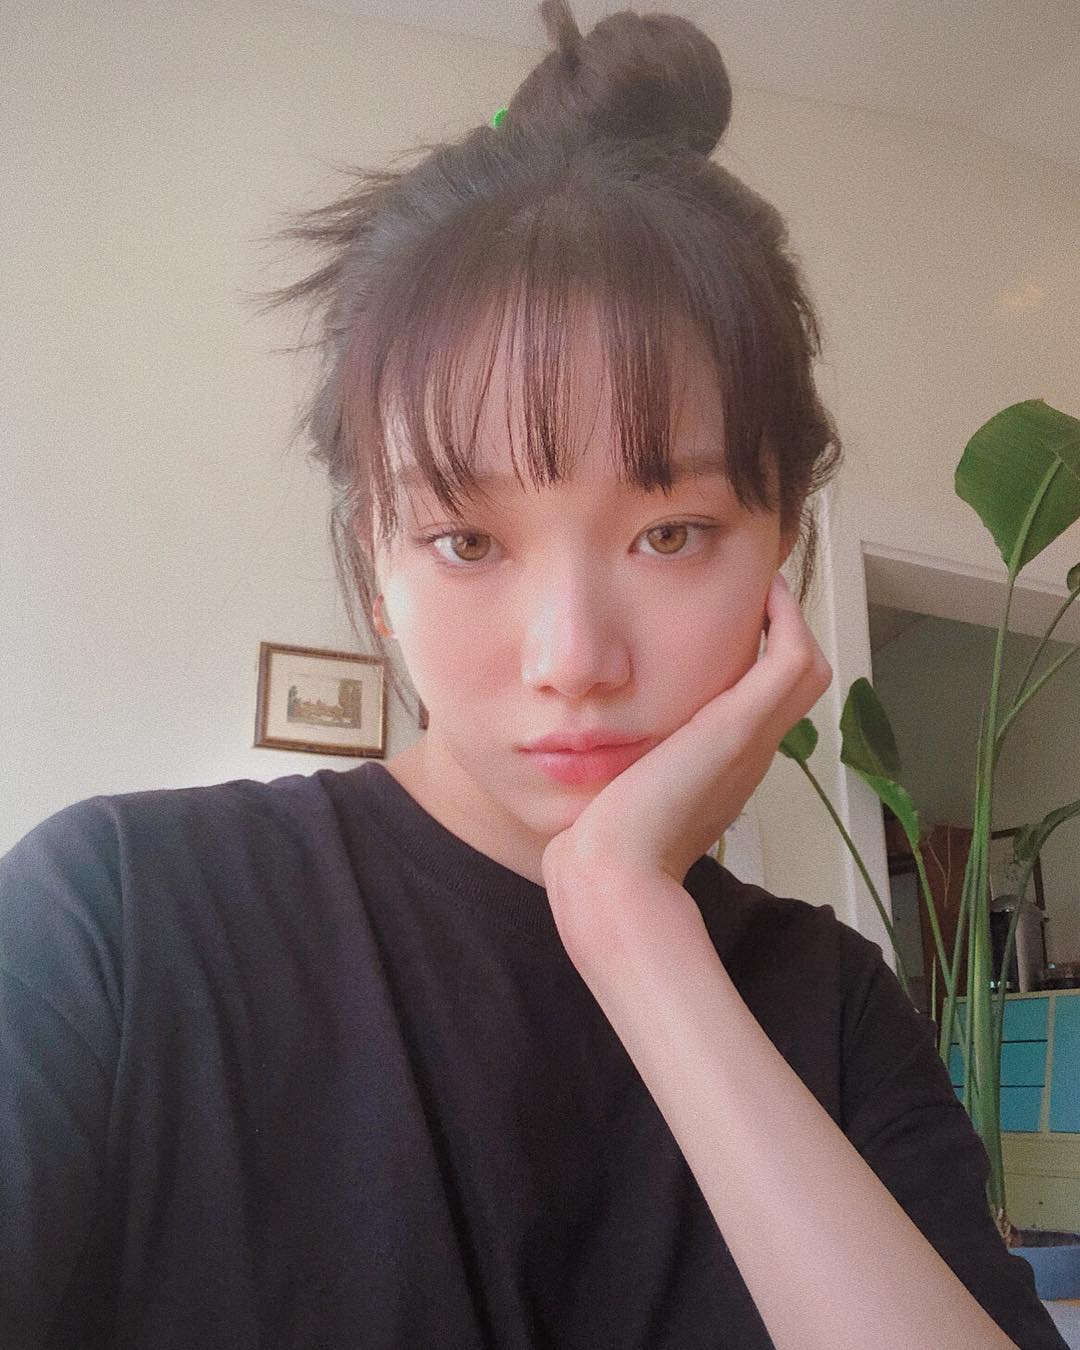 Lee sung kyung instagram